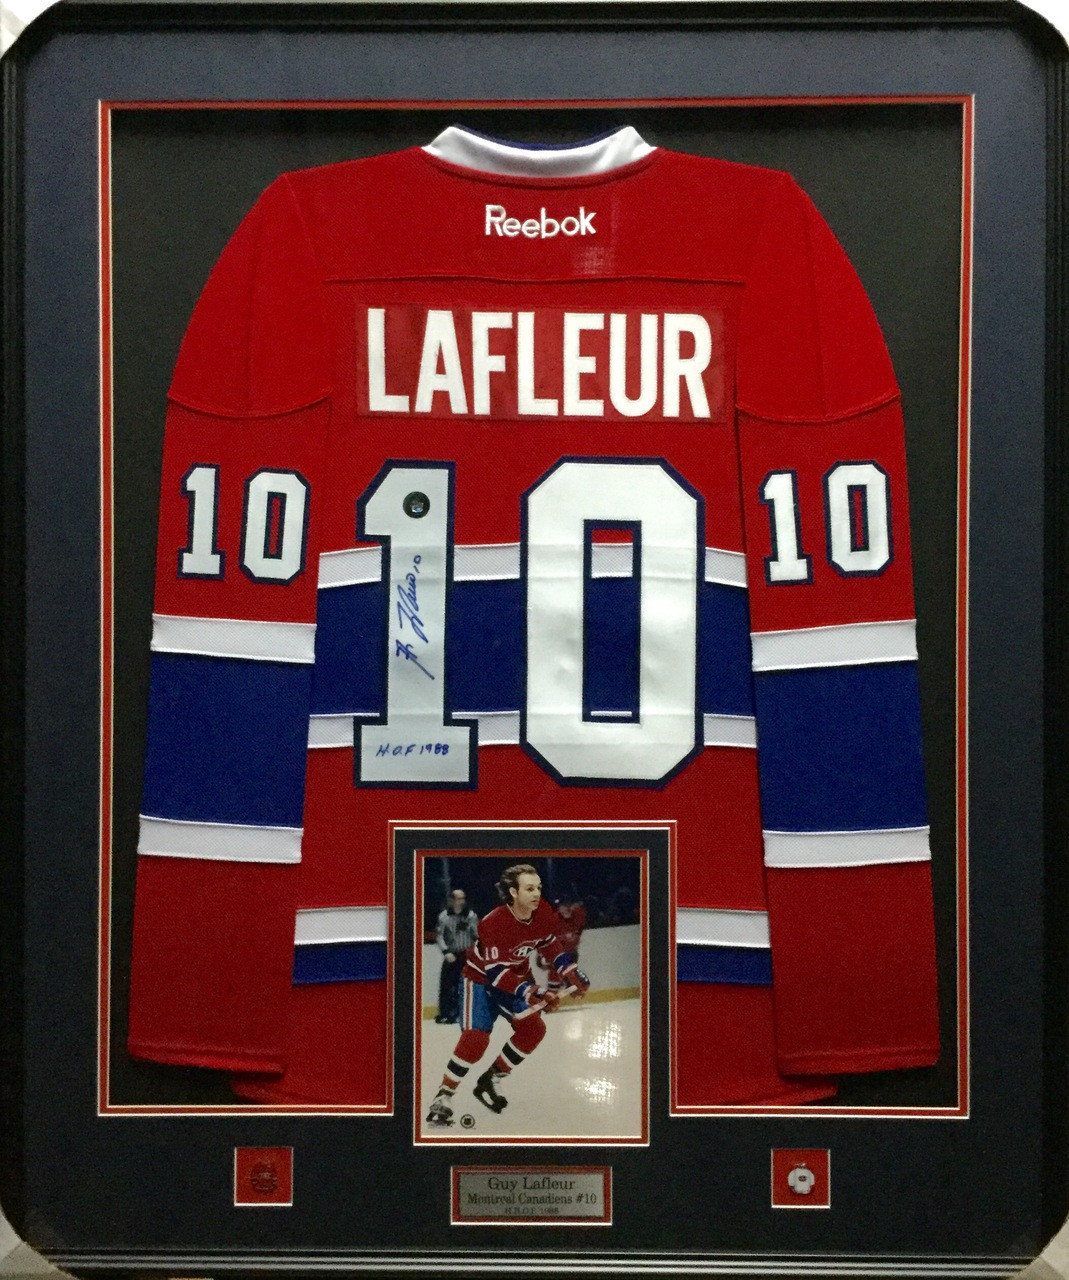 guy lafleur signed jersey authentic